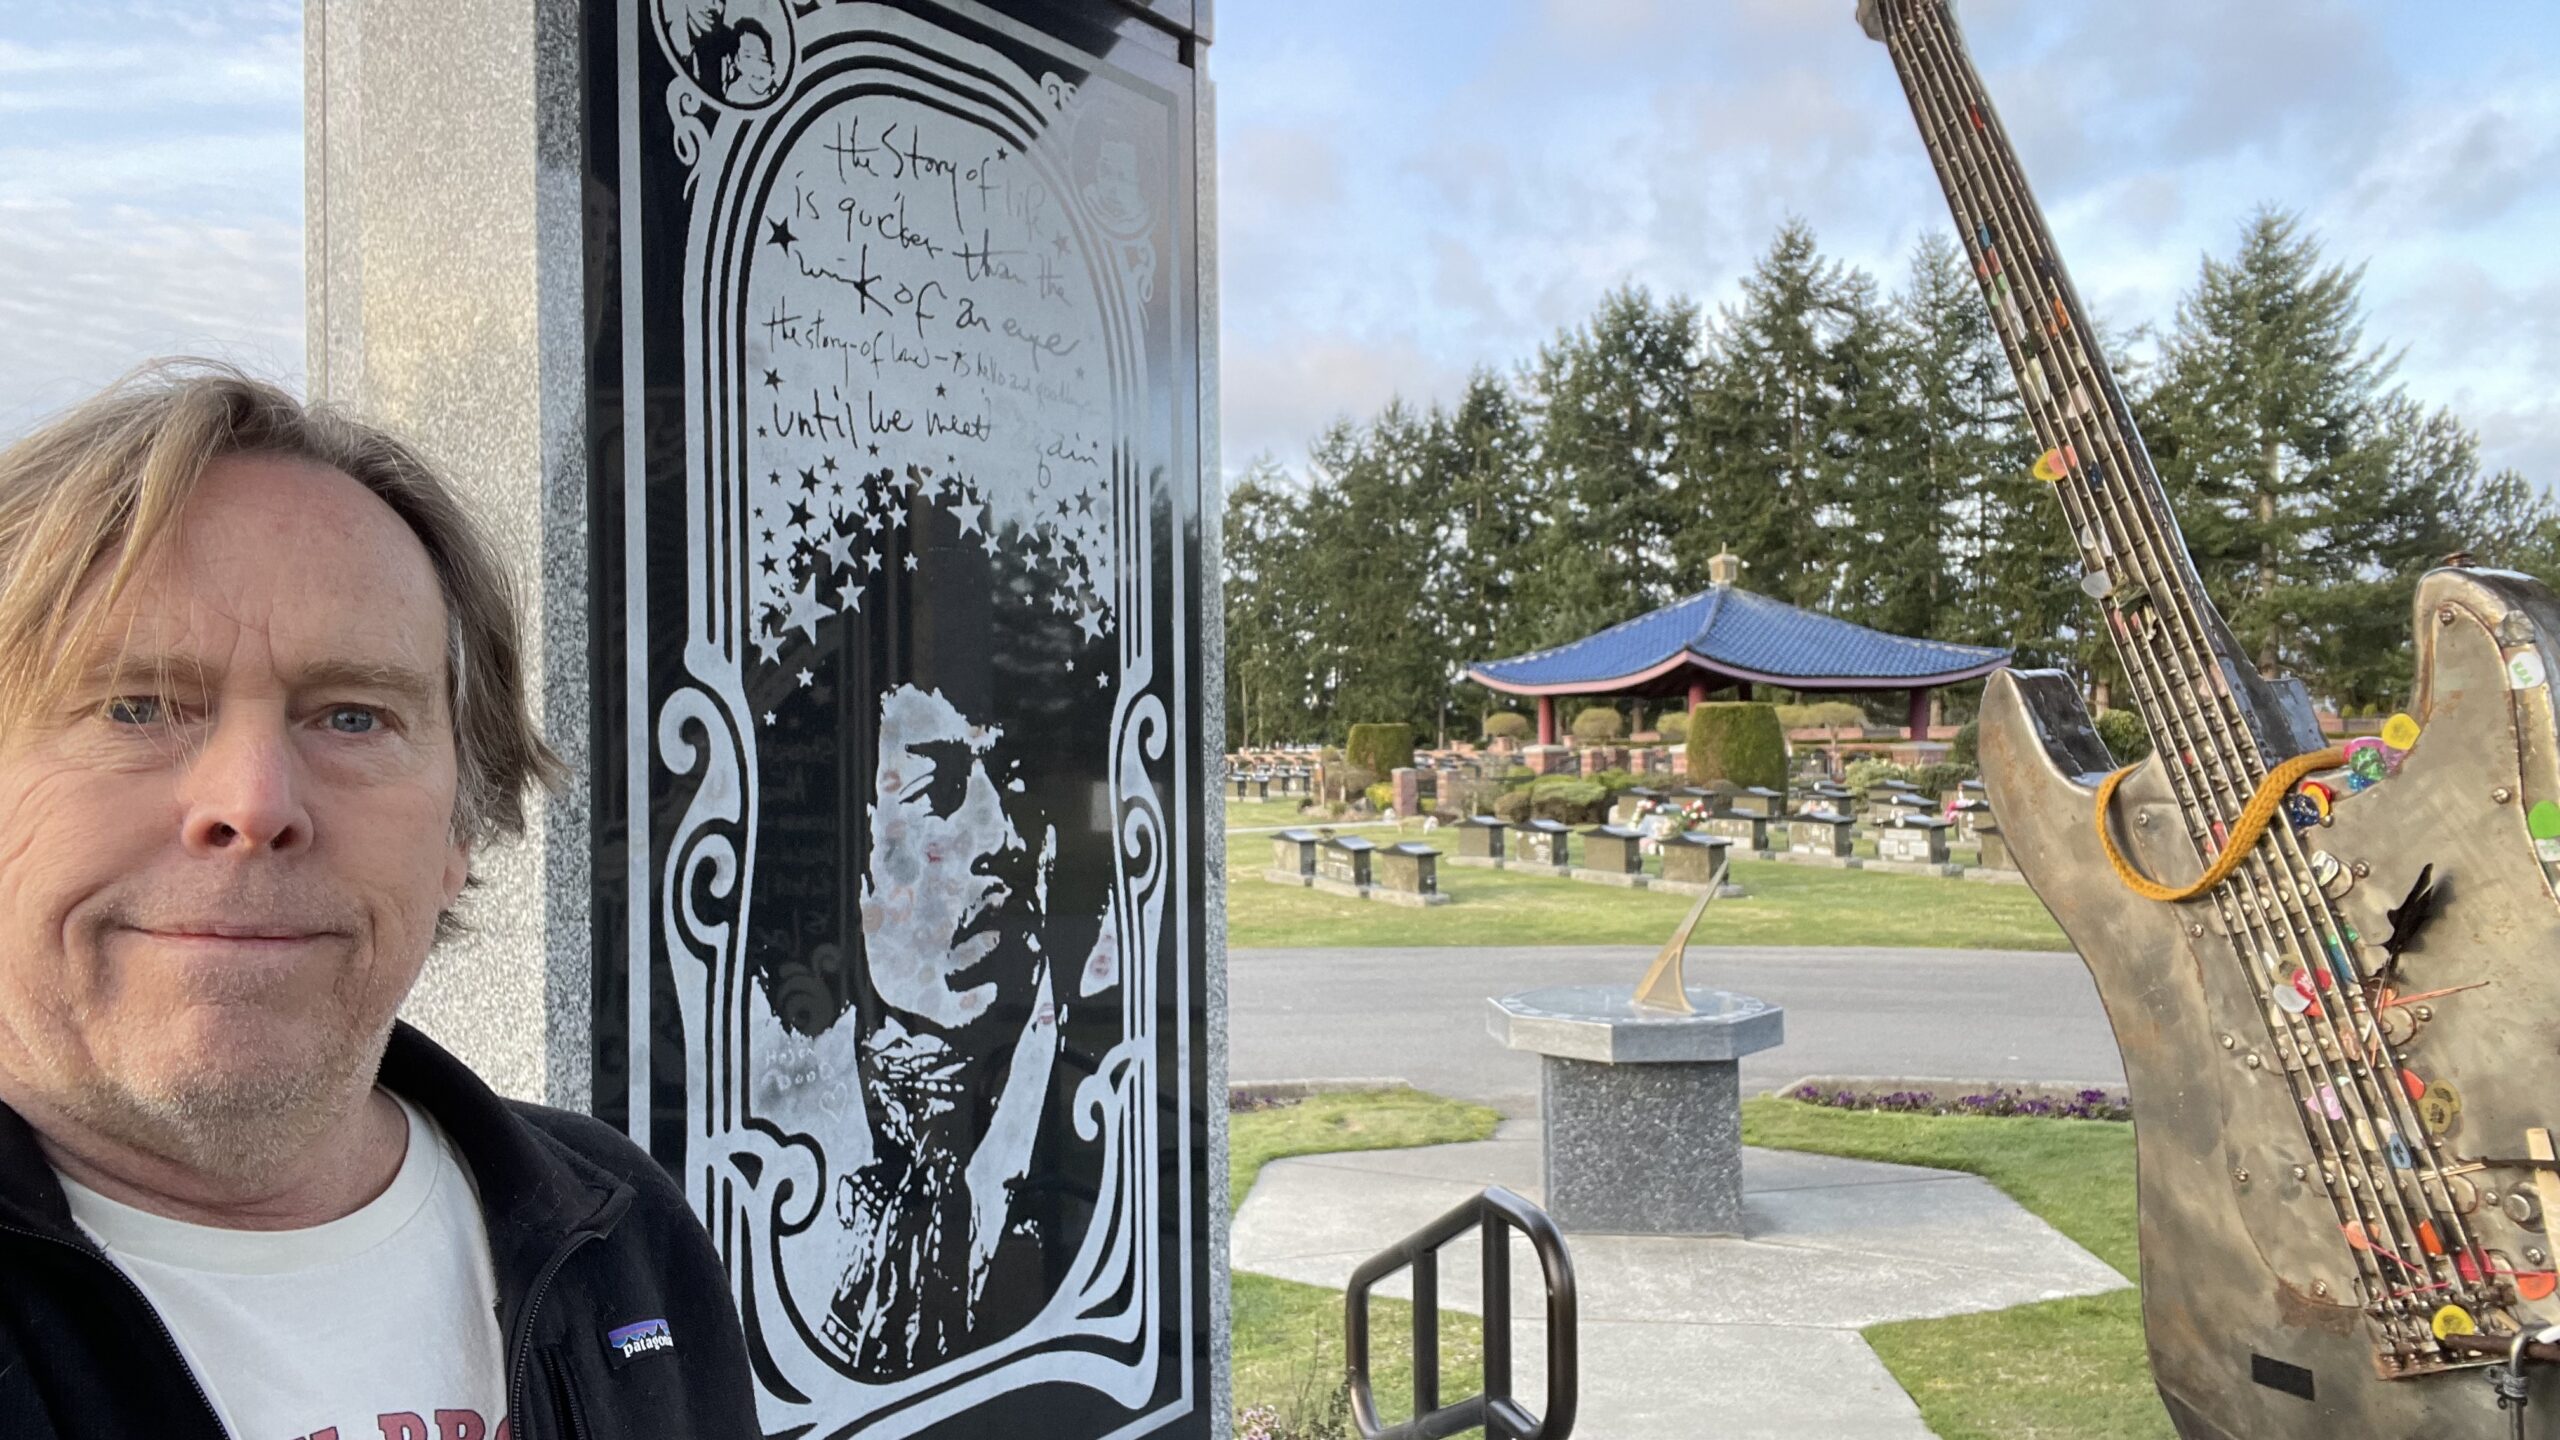 Todd at the Jimi Hendrix memorial with art of Jimi Hendrix.